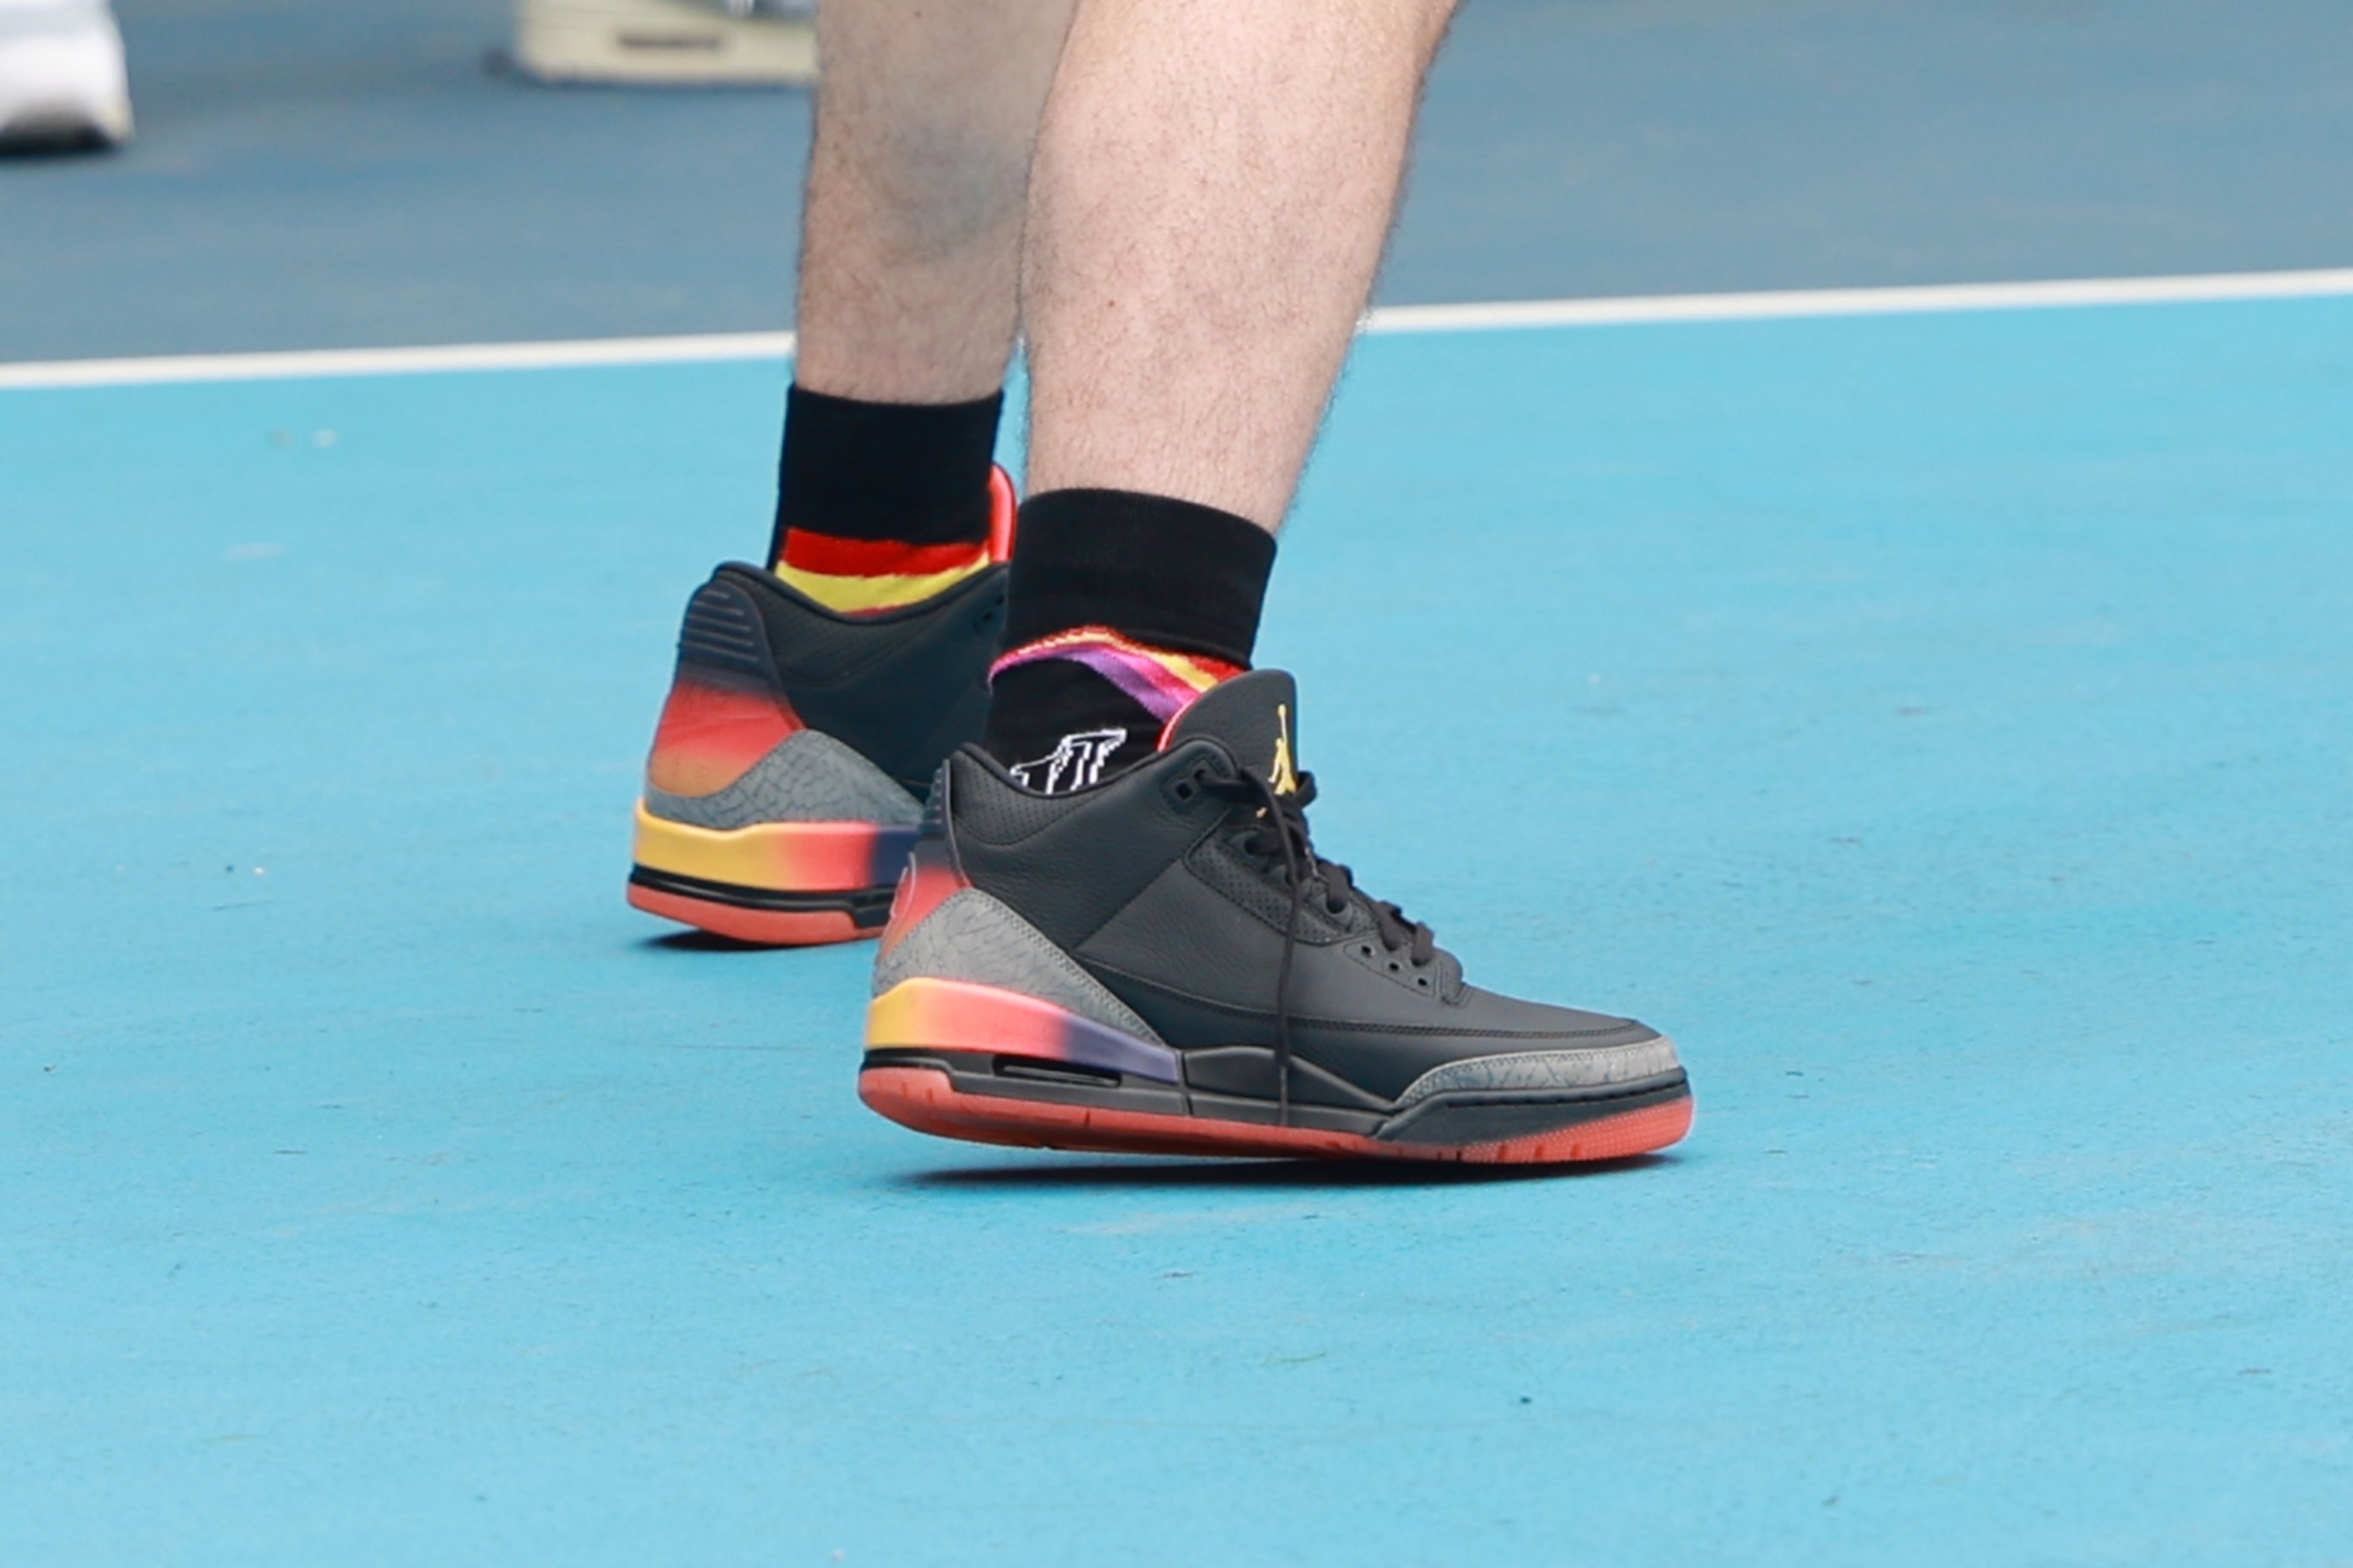 J Balvin Flexes The Never-Before-Seen 'Rio' Air Jordan 3 Sneakers